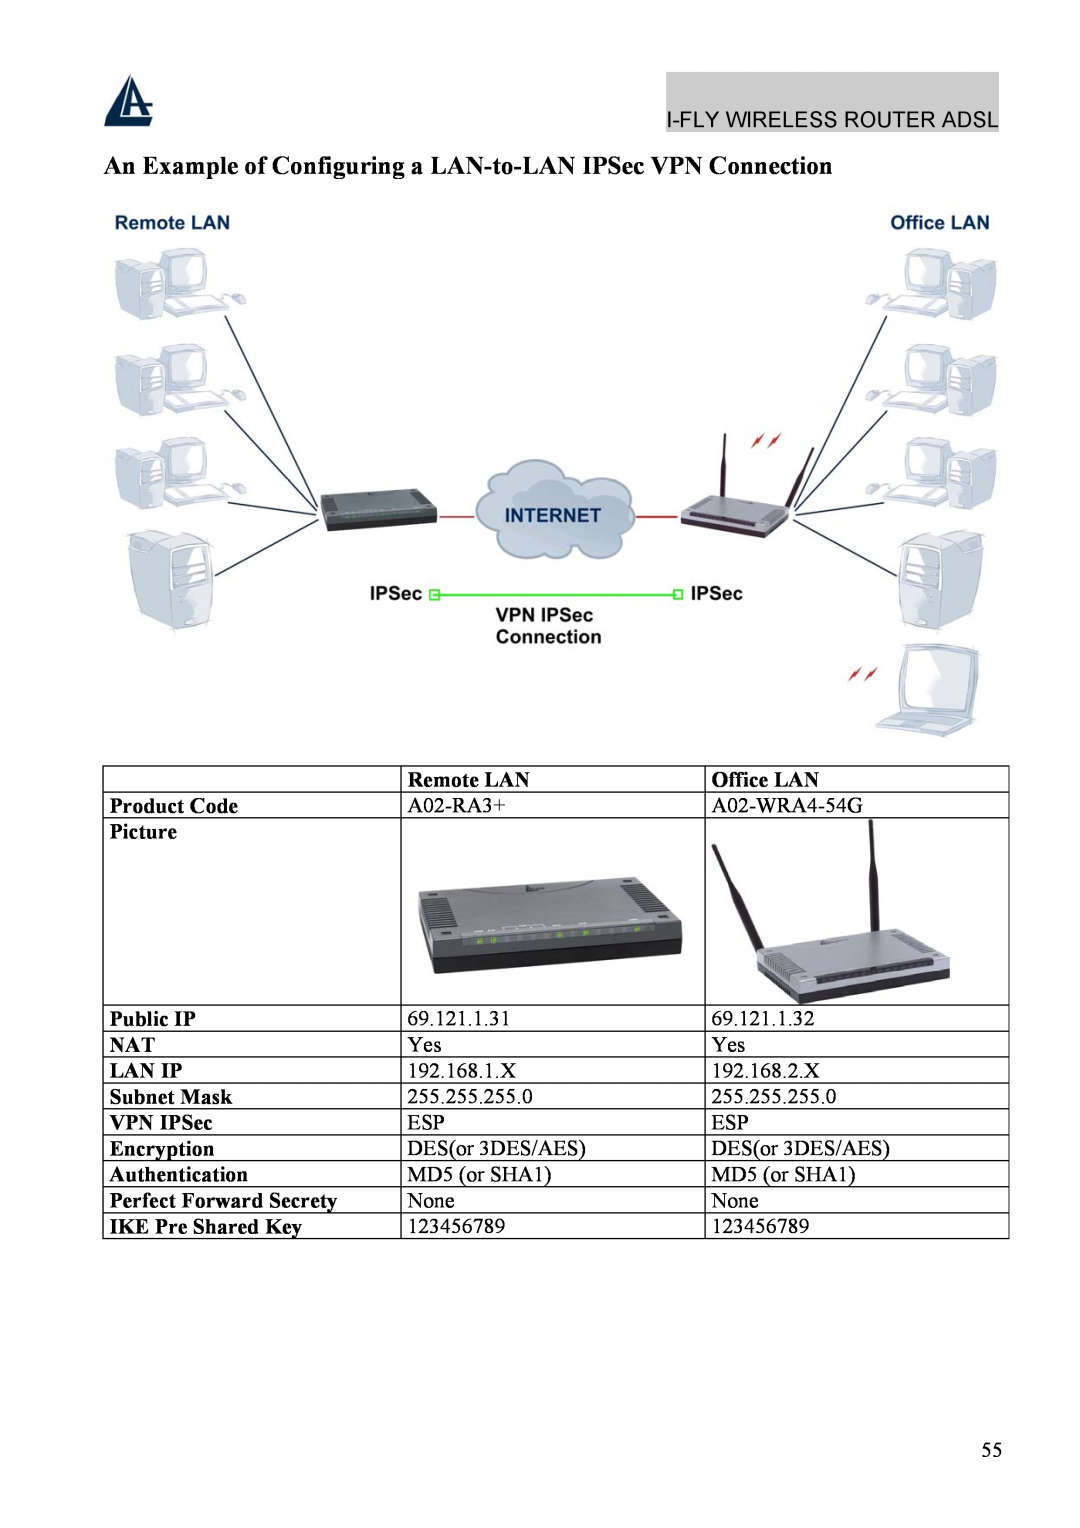 Atlantis Land A02-WRA4-54G An Example of Configuring a LAN-to-LAN IPSec VPN Connection, VPN IPSec, Encryption, Remote LAN 